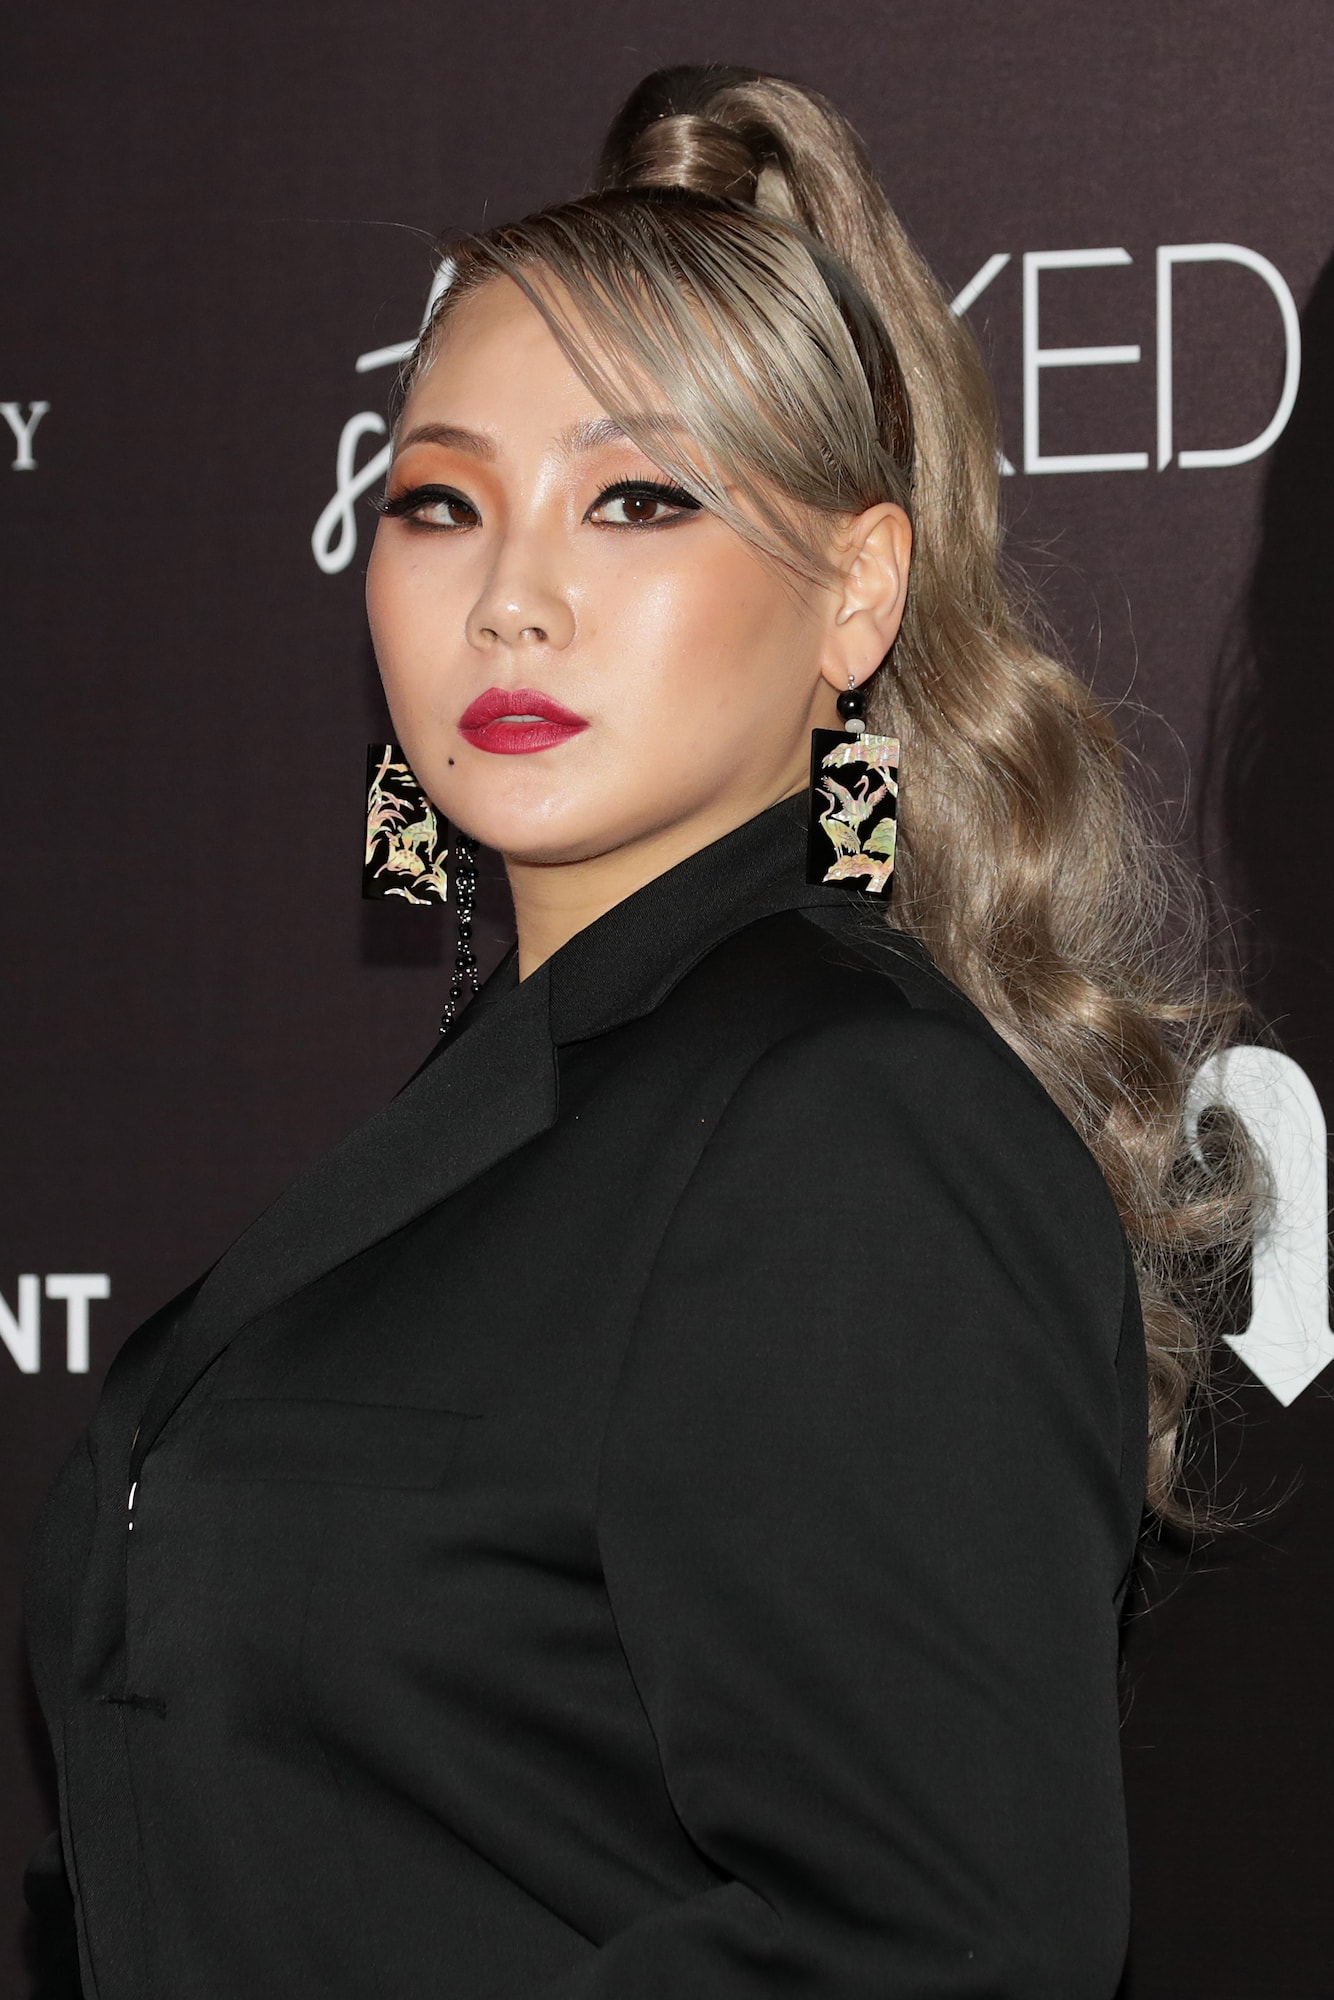 CL Leaves YG Entertainment Contract Disputes Music K-Pop Disagreement 